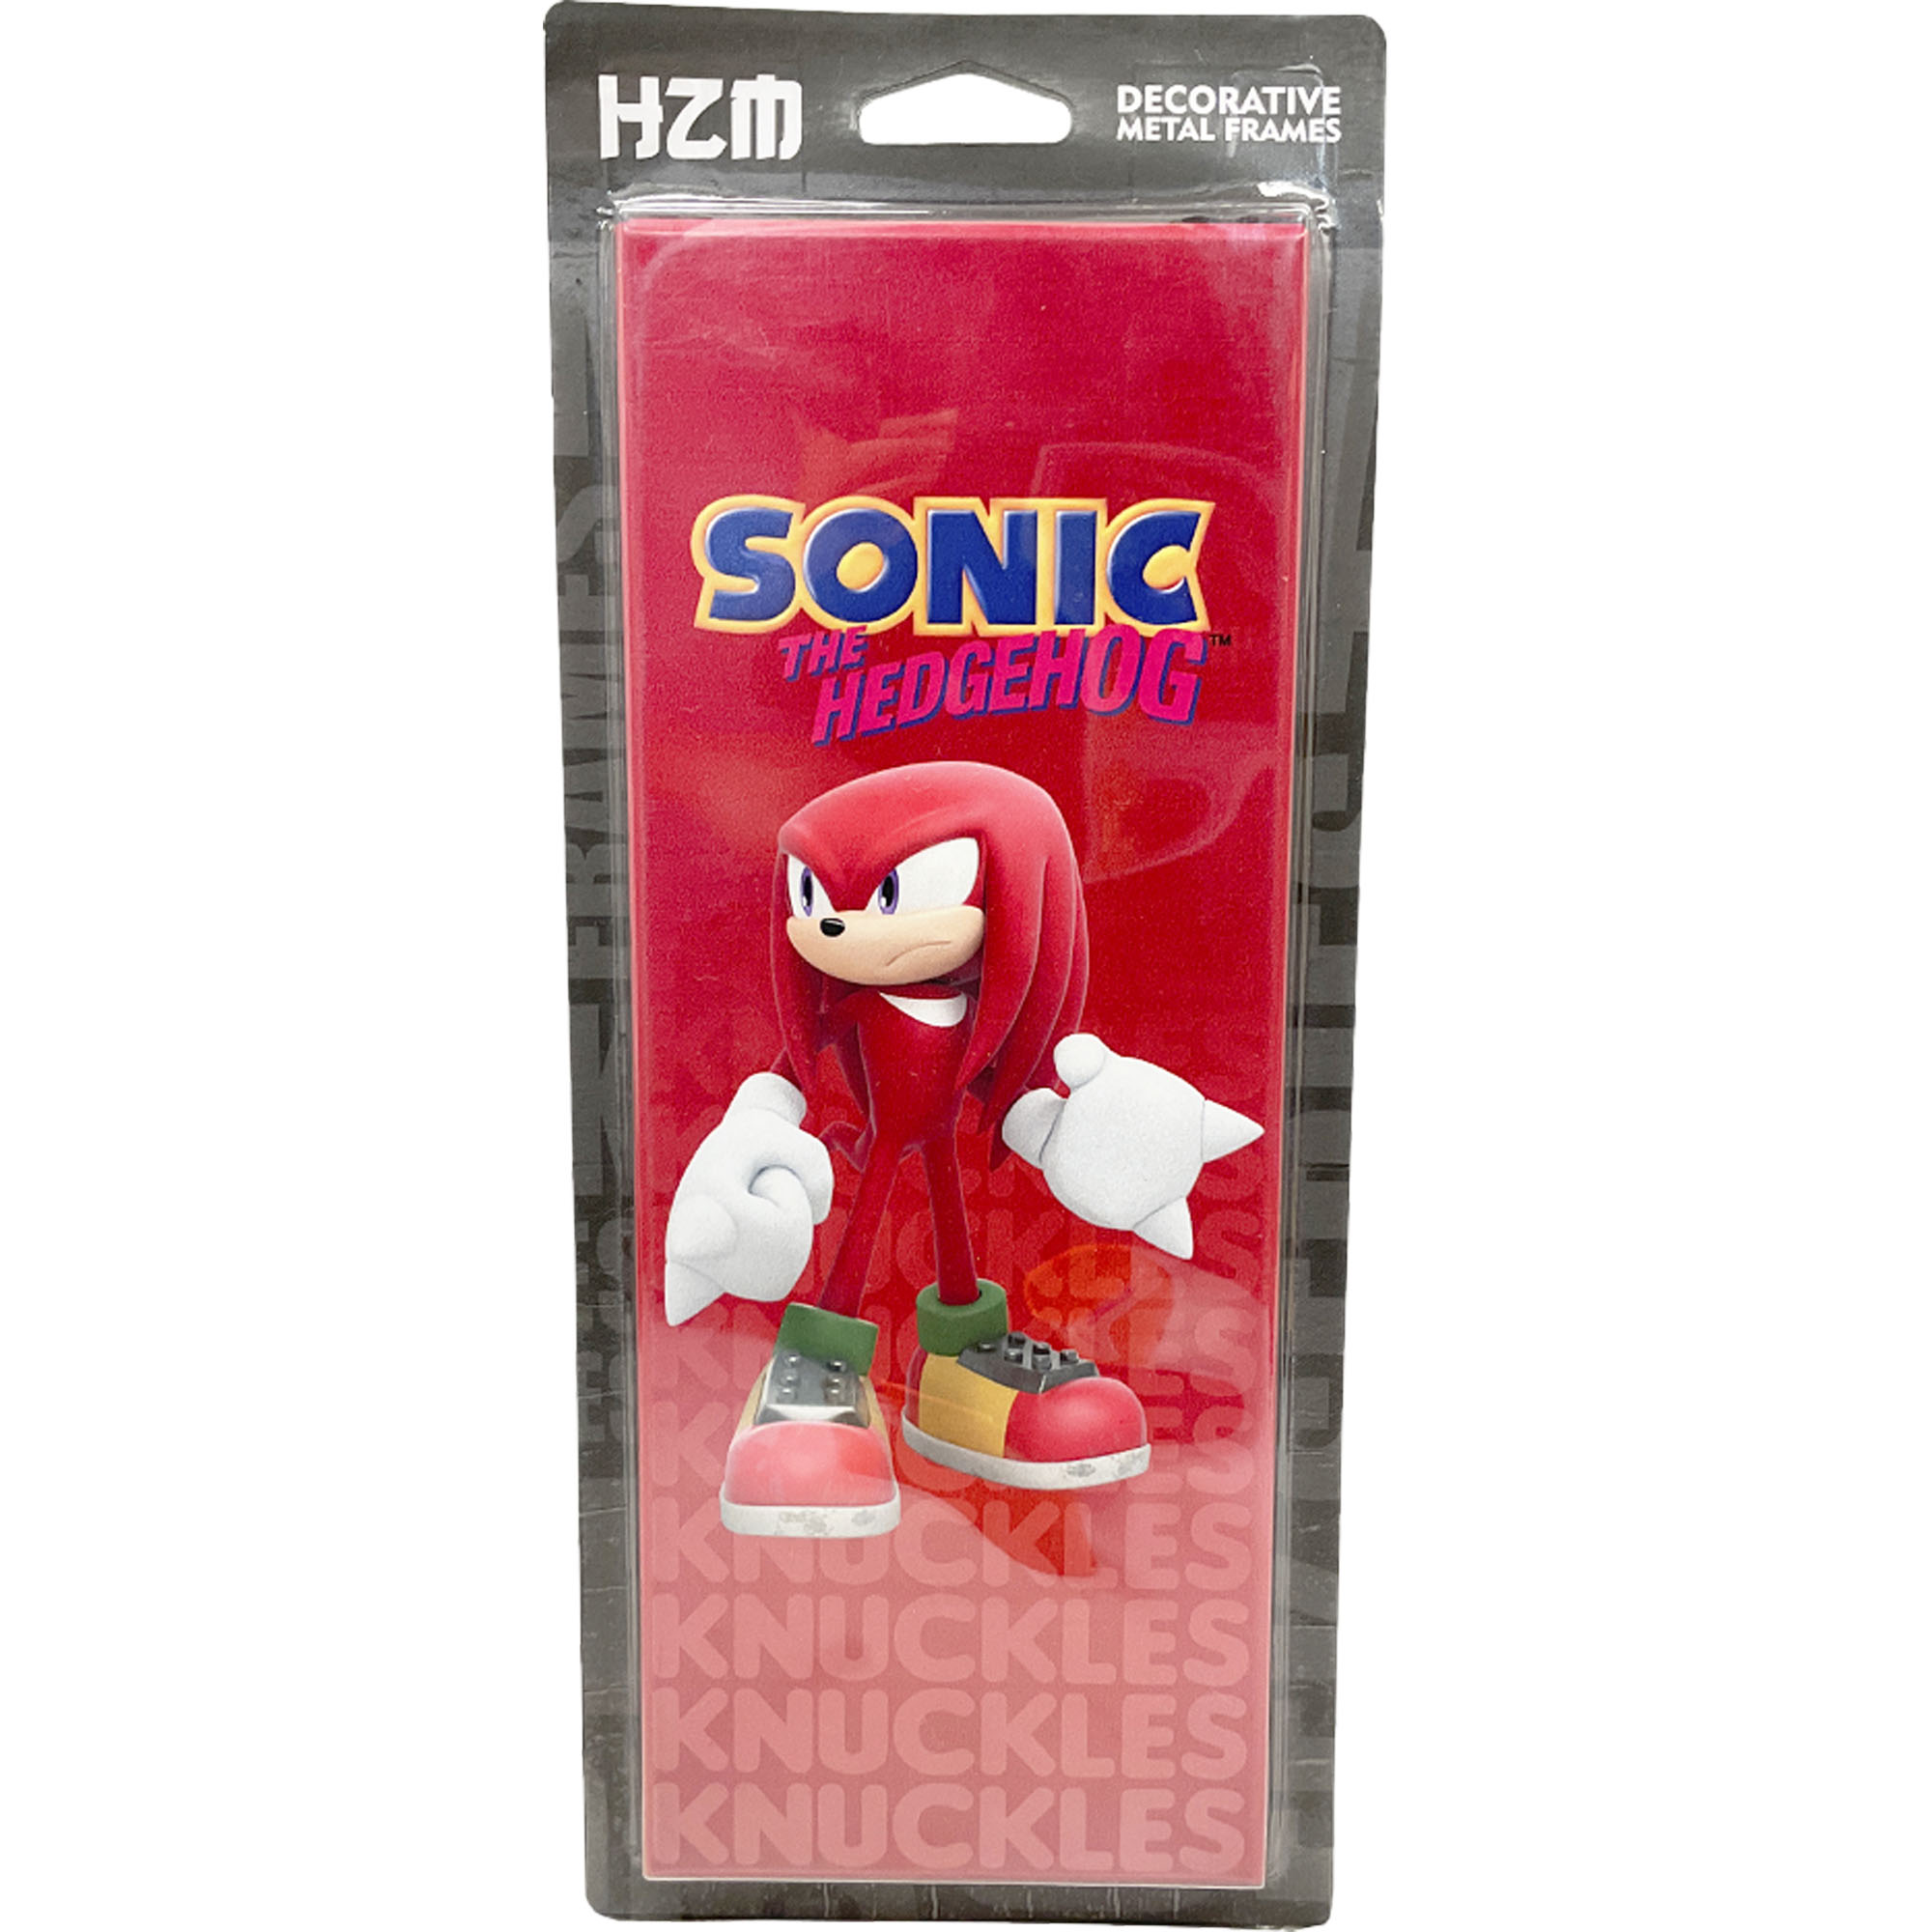 Quadro de Metal Decorativo 26x10 - Sonic Headgehog KNUCKLES